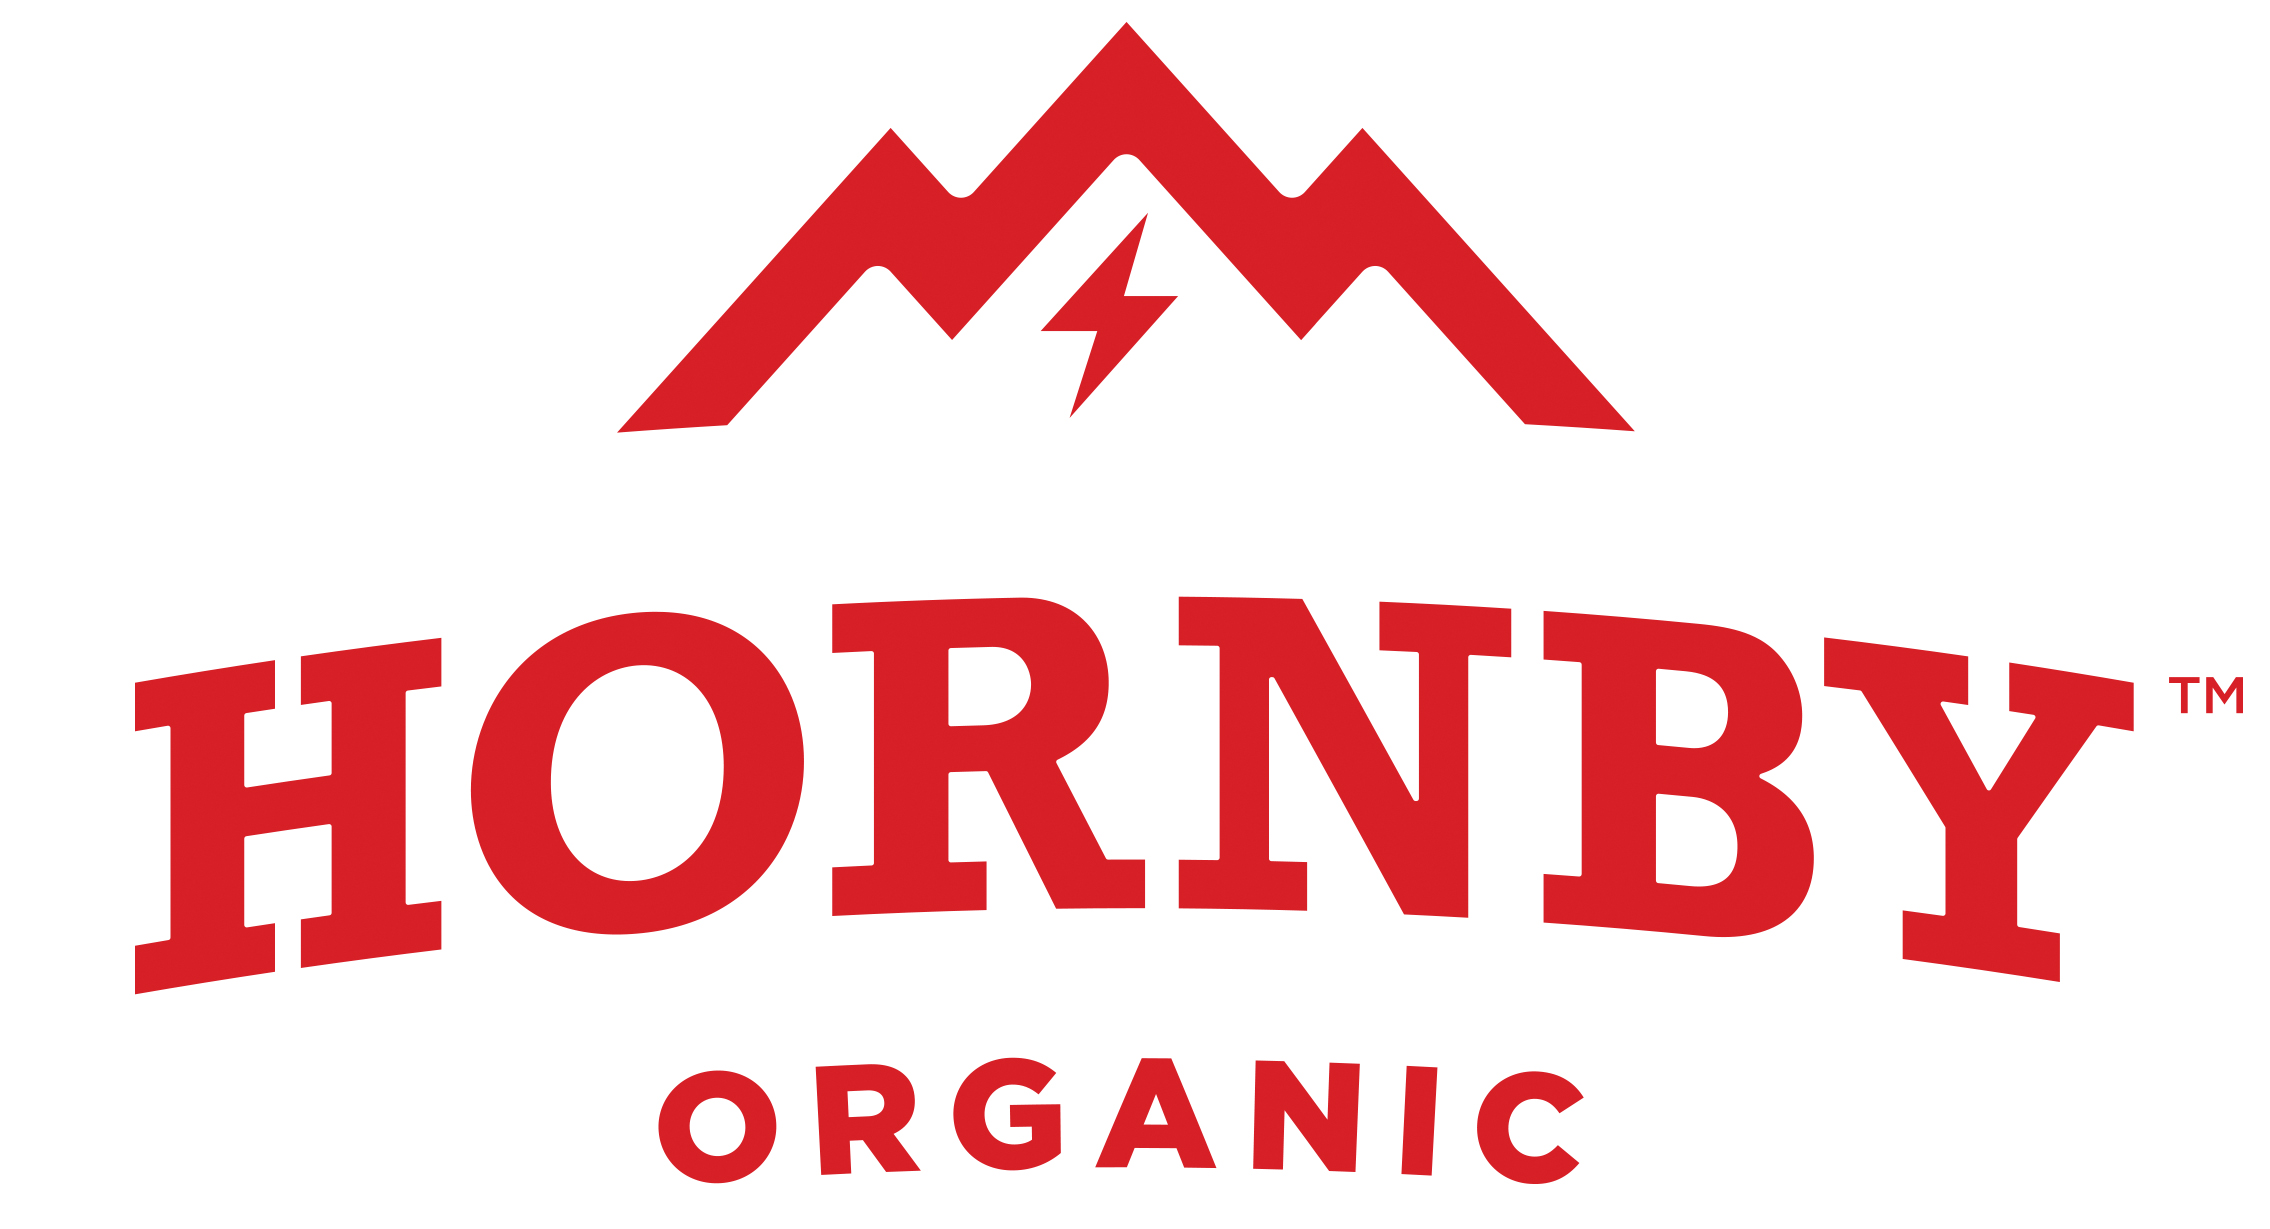 Hornby Organic logo image.